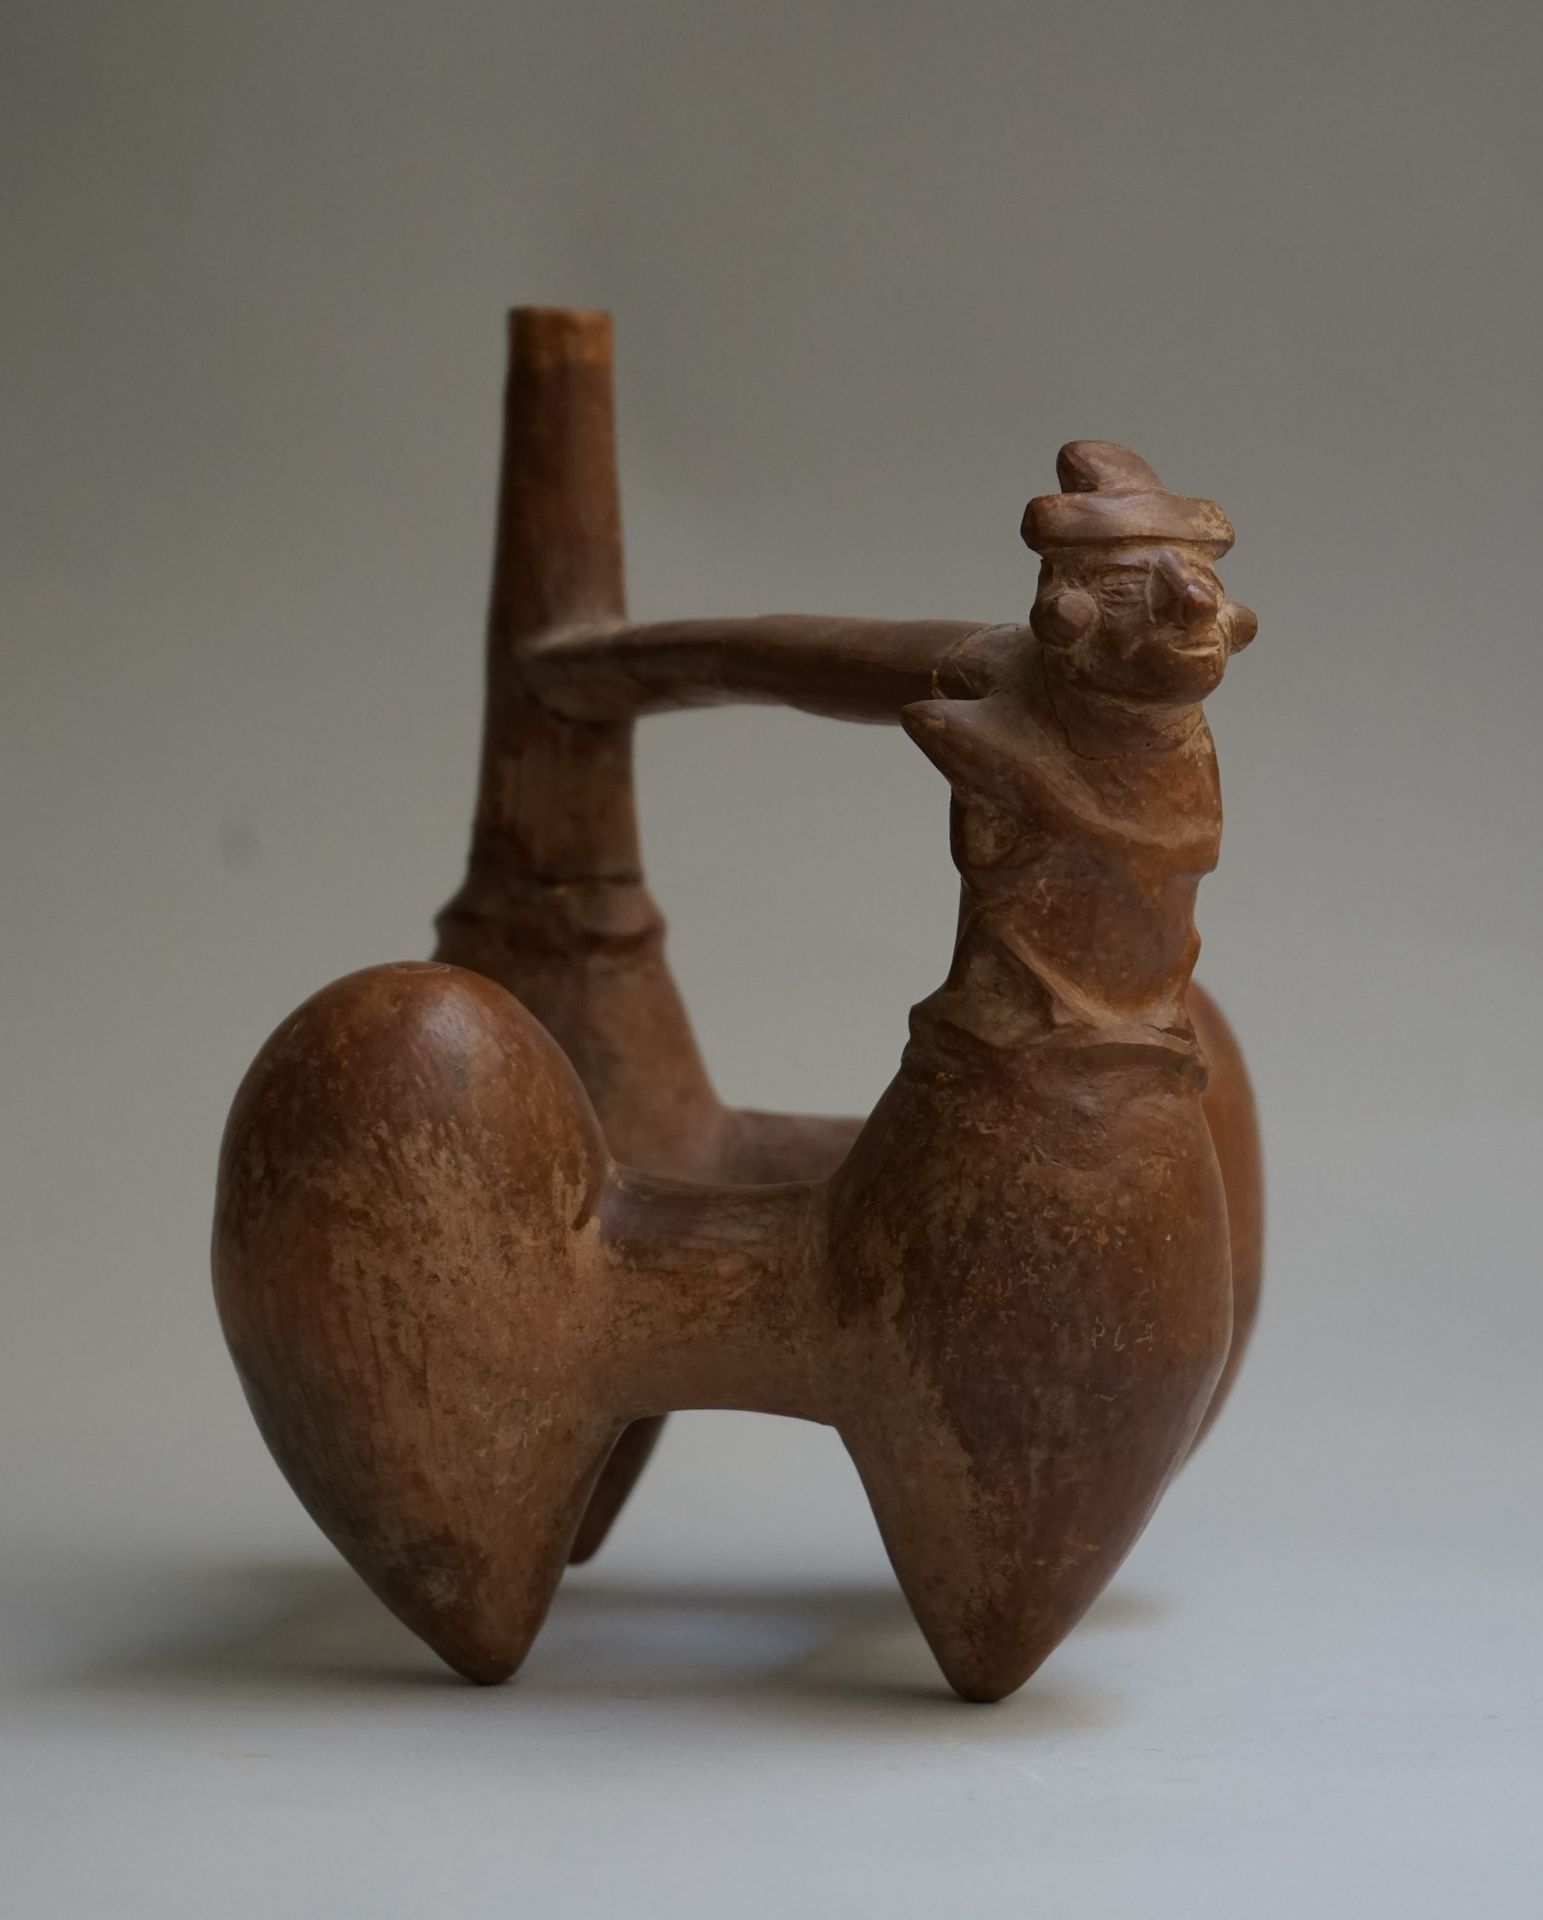 Null 吹口哨的花瓶，有四个水果形的脚，其中一个脚上有一个手持棍棒的人物，通过一个桥形把手与瓶身相连。橙色-米色的陶土。手柄和颈部破损并被粘住。

兰巴耶克，&hellip;